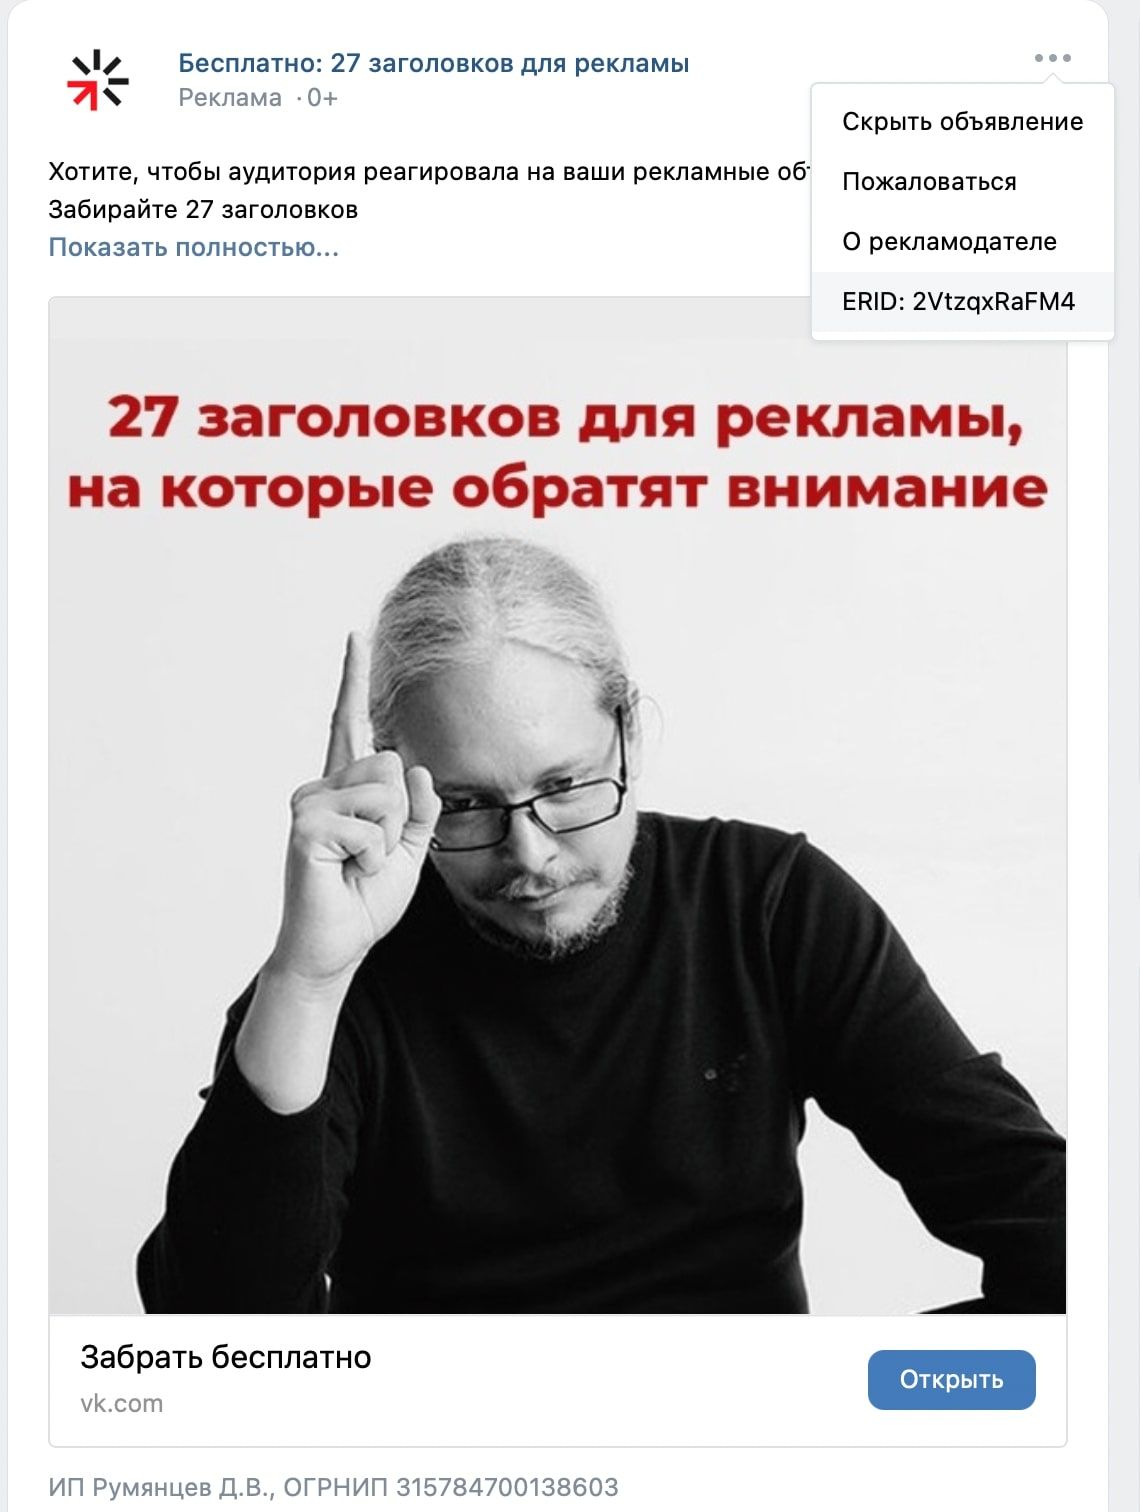 Example of advertising marking from VKontakte